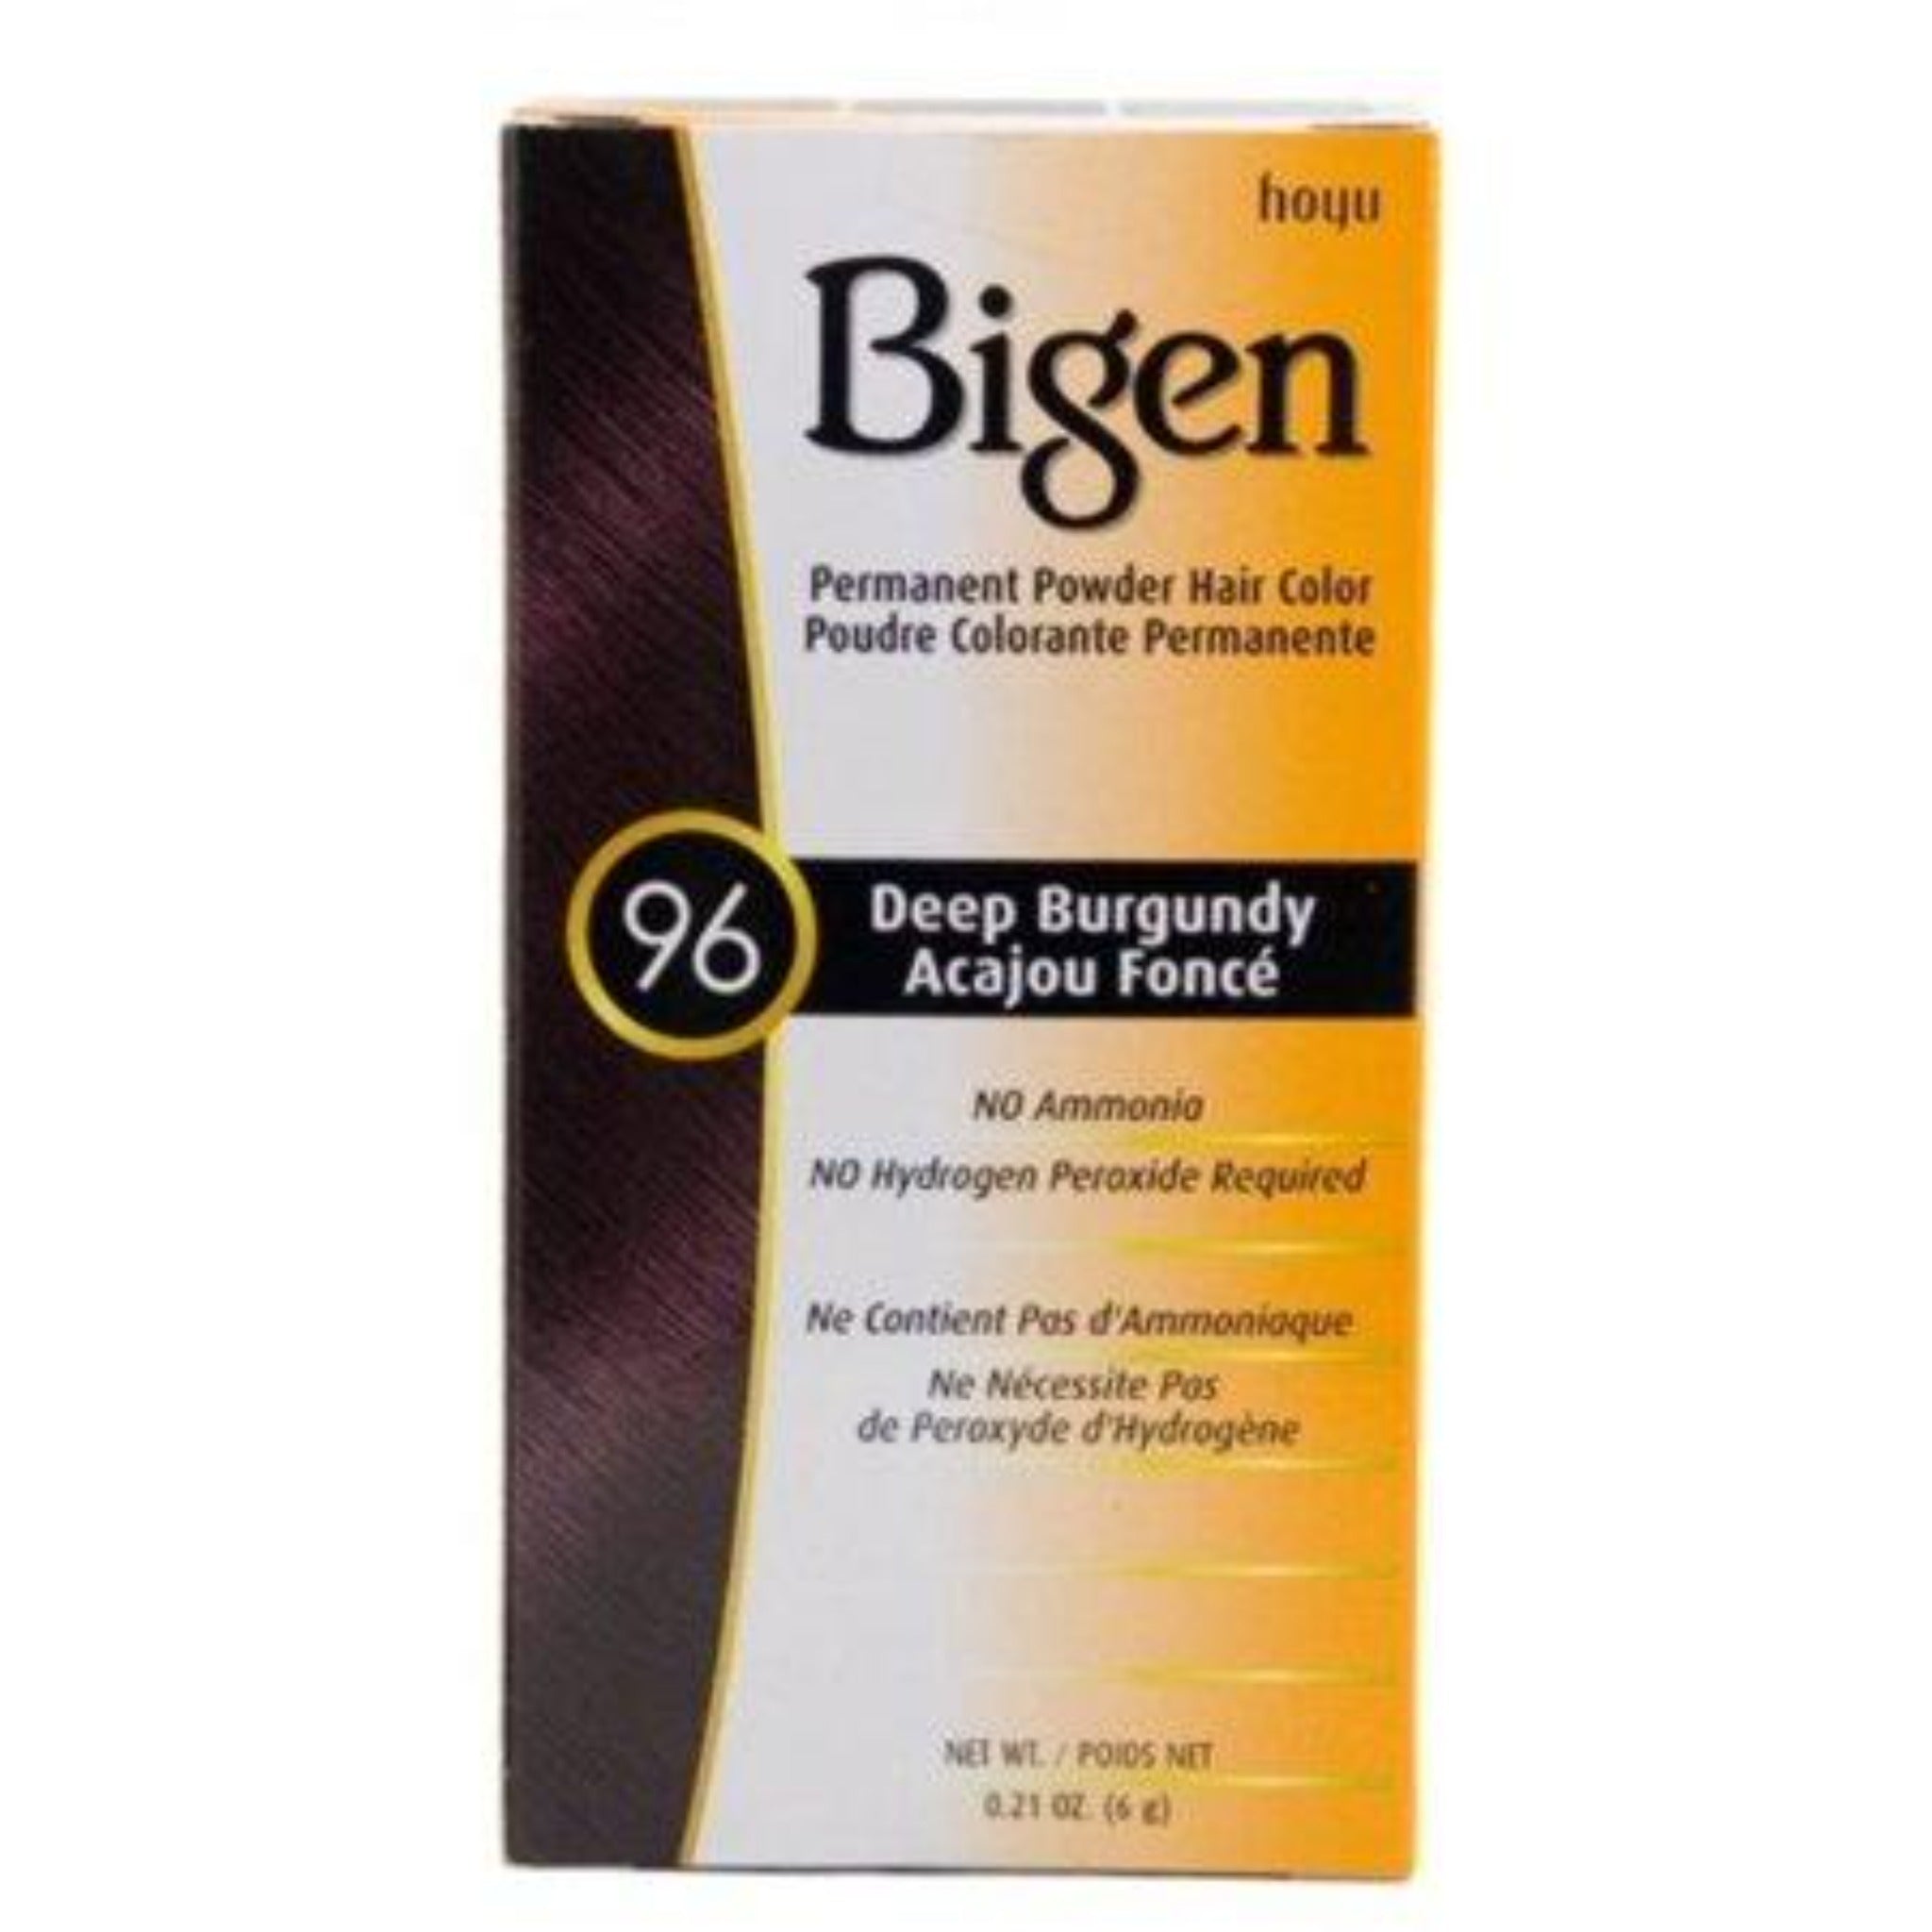 Bigen #96 Deep Burgundy